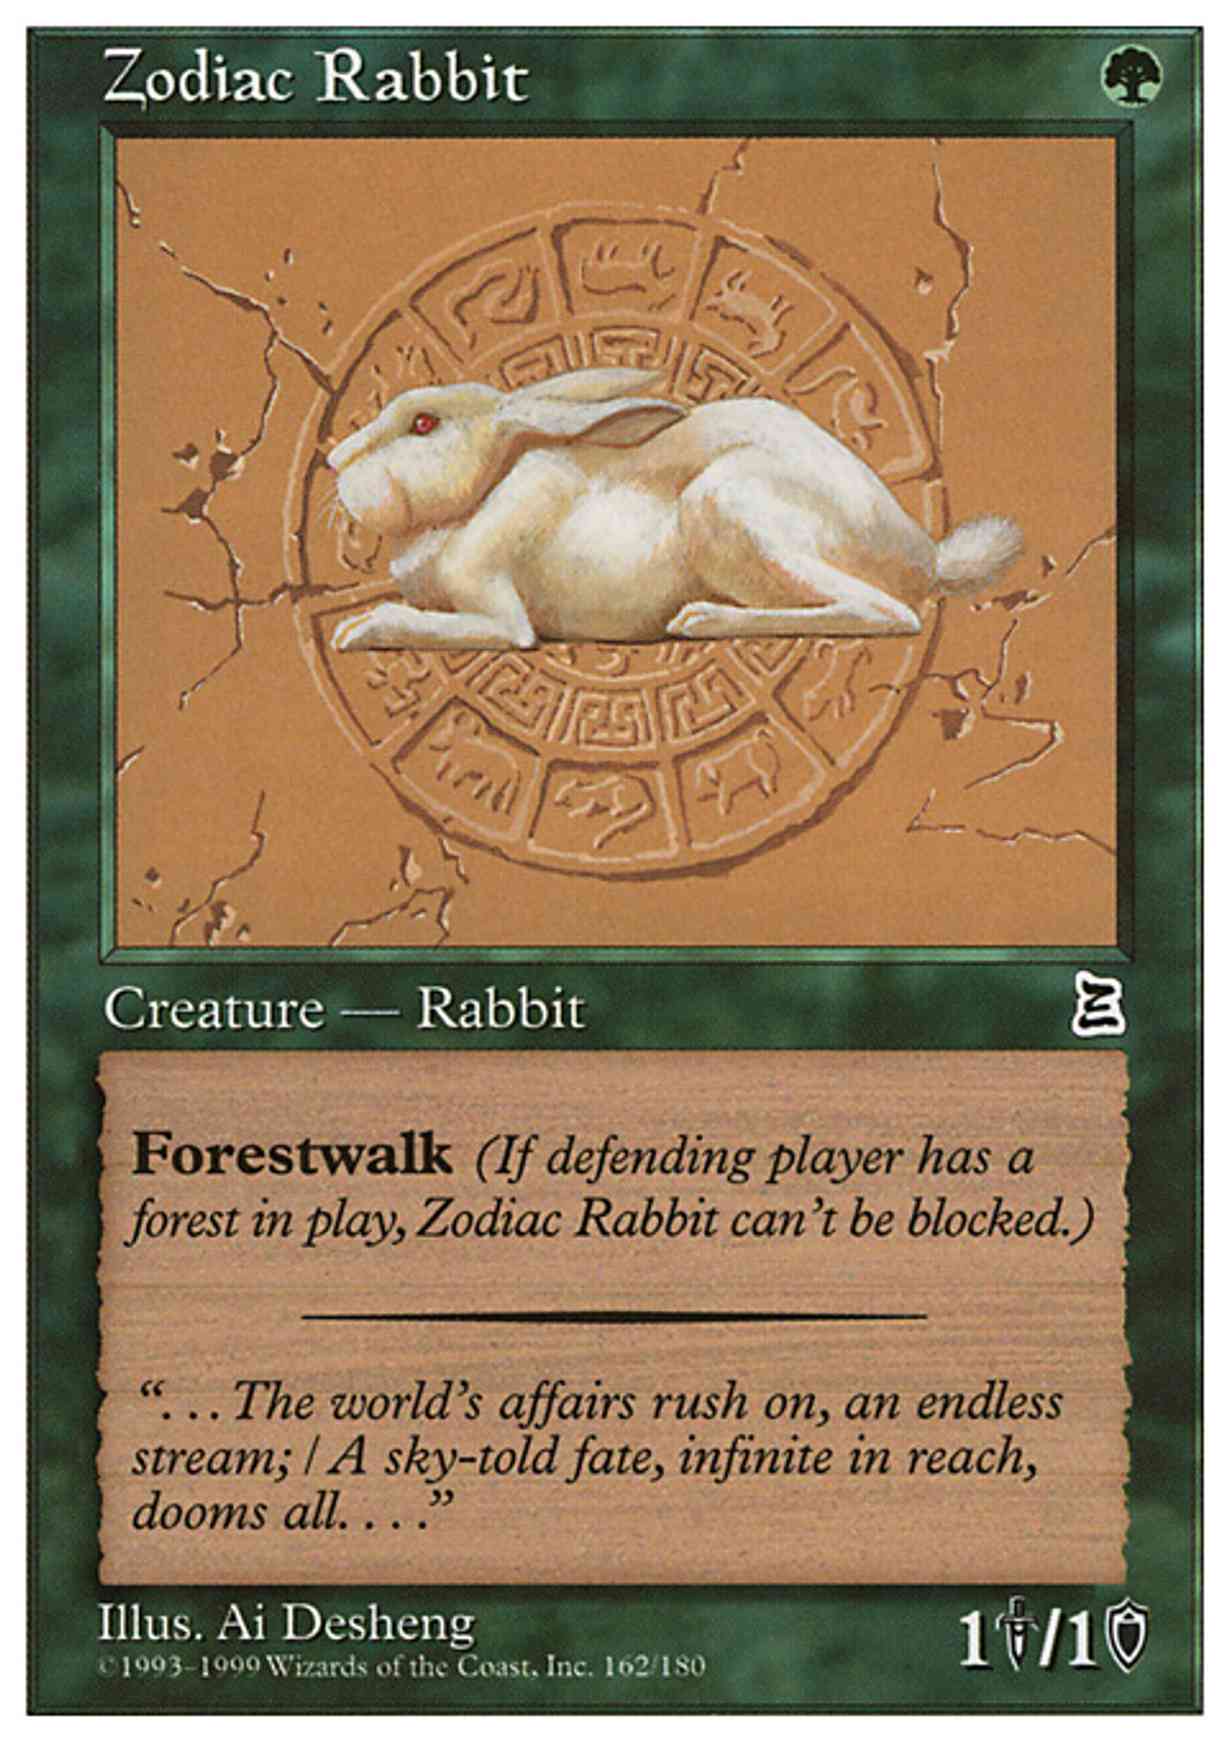 Zodiac Rabbit magic card front